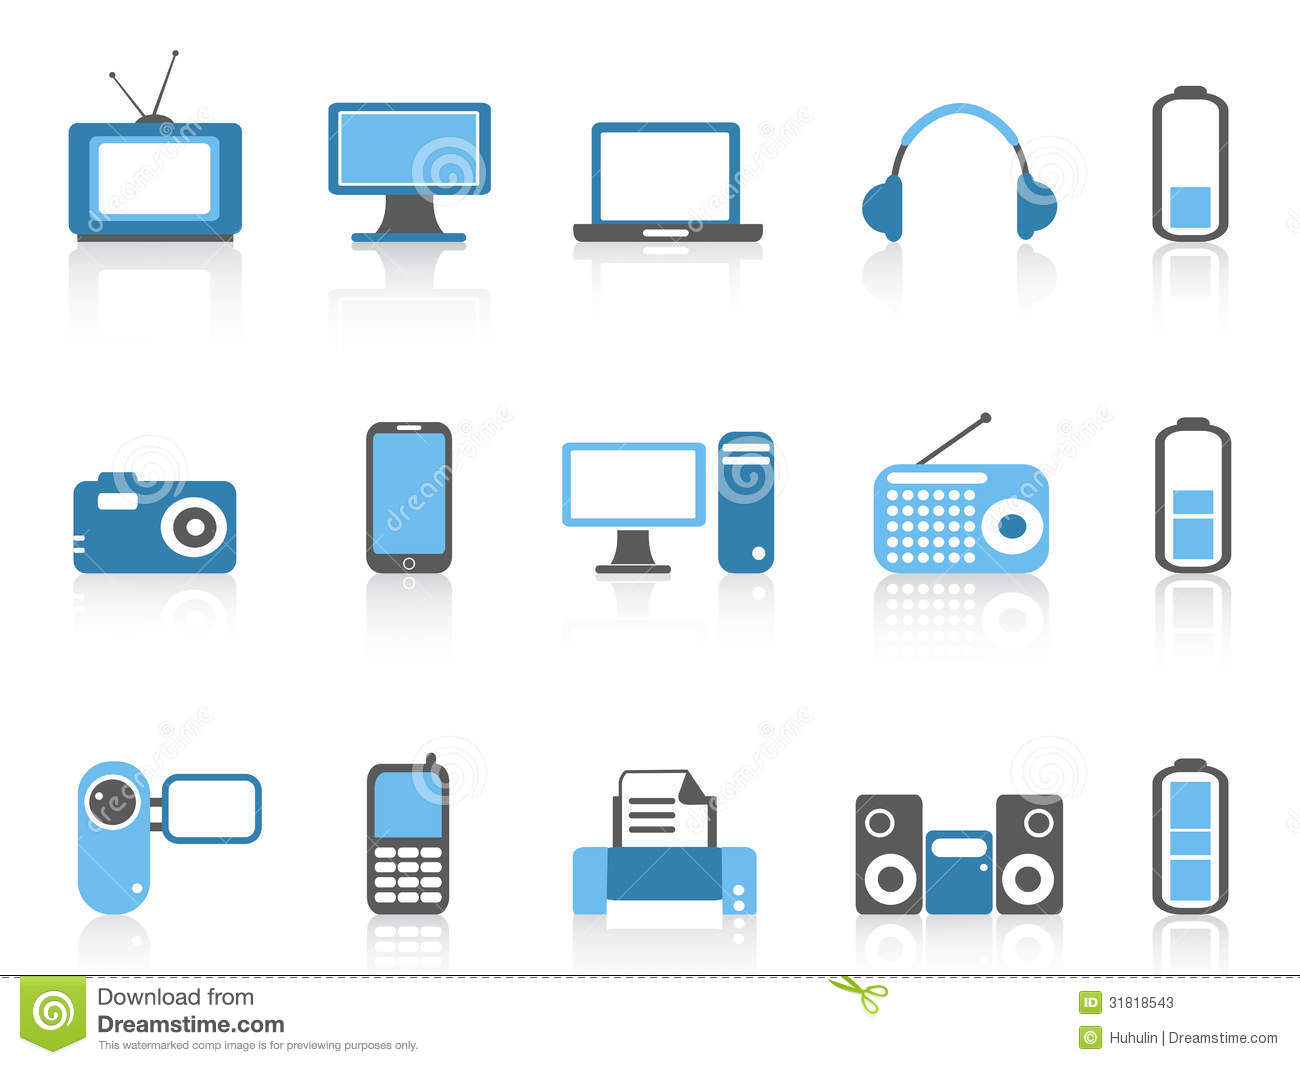 Electronics Icon